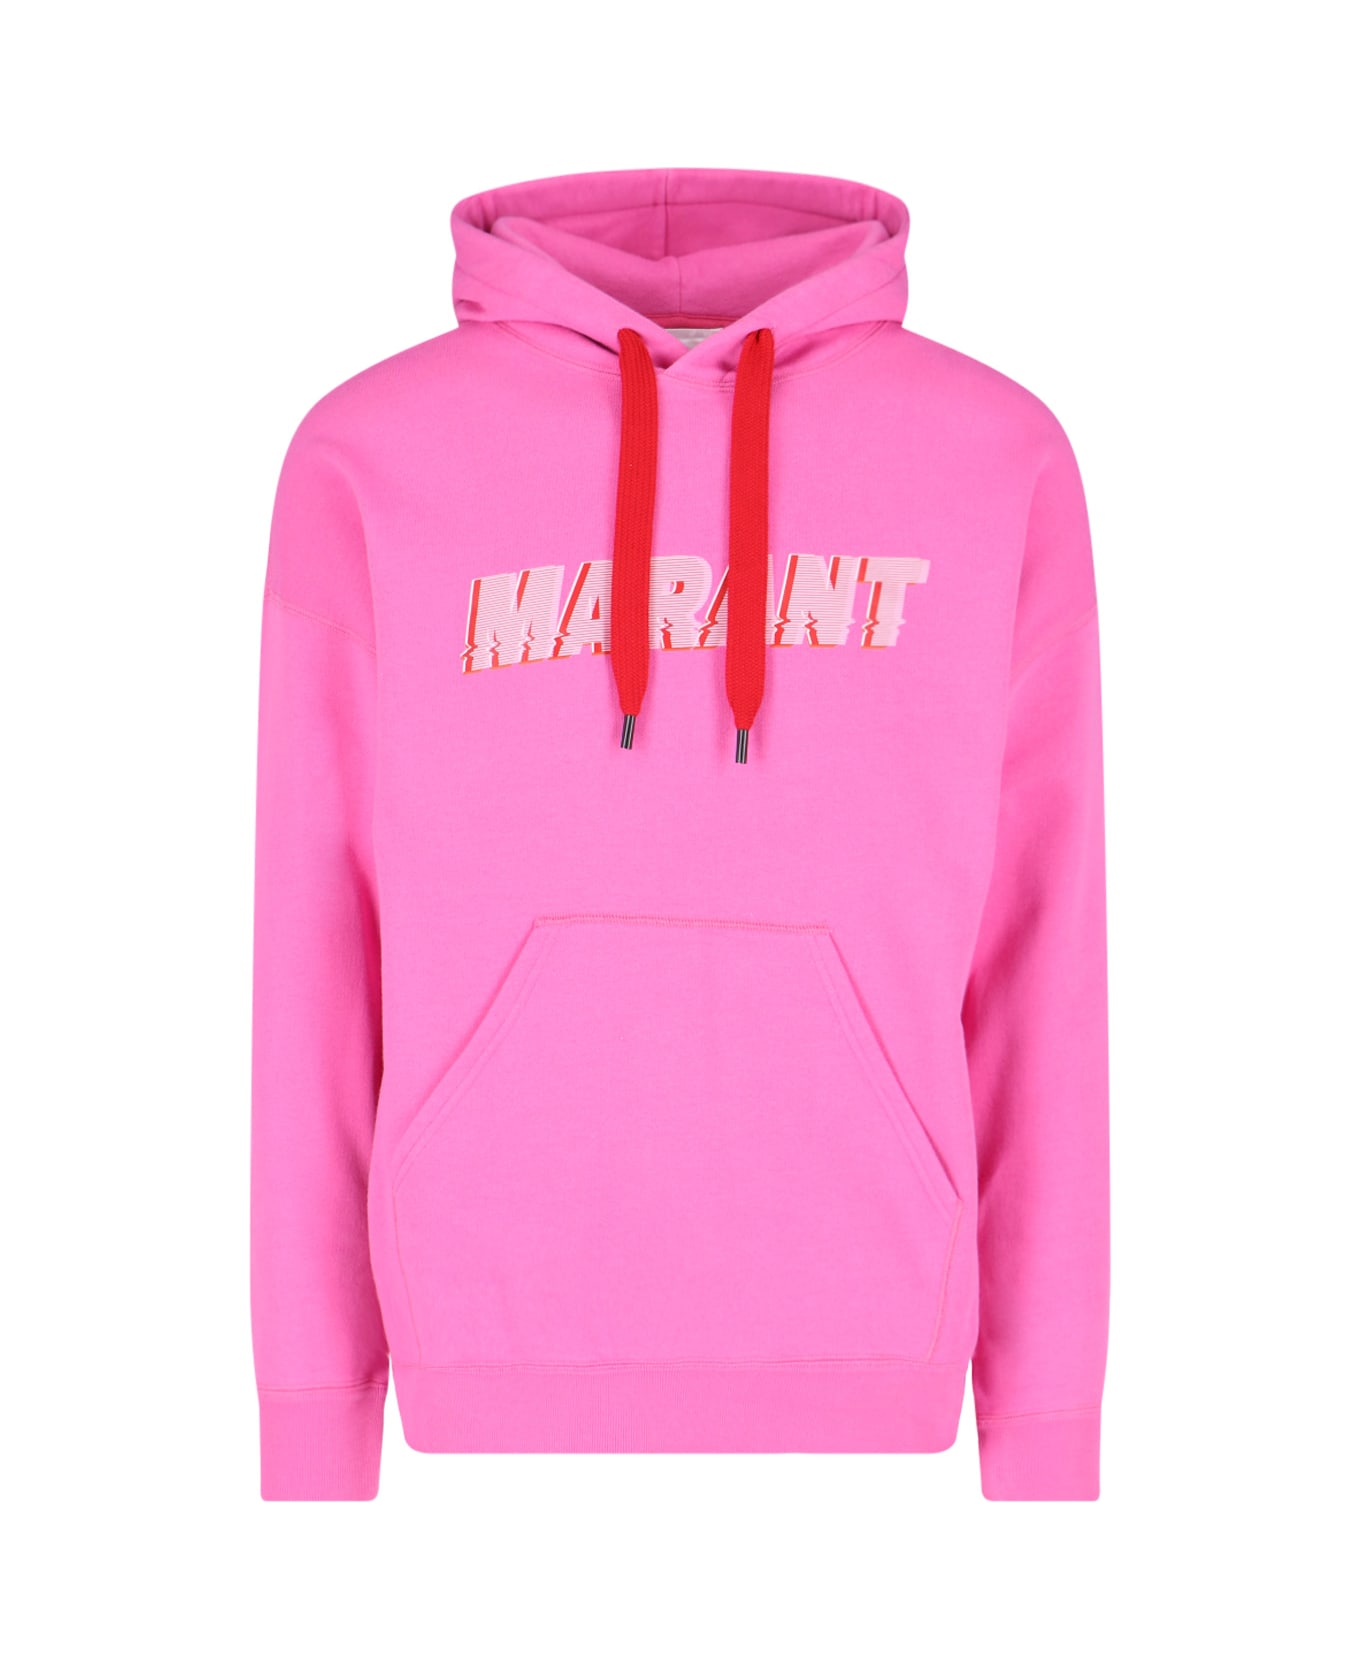 Isabel Marant Sweater - Pink